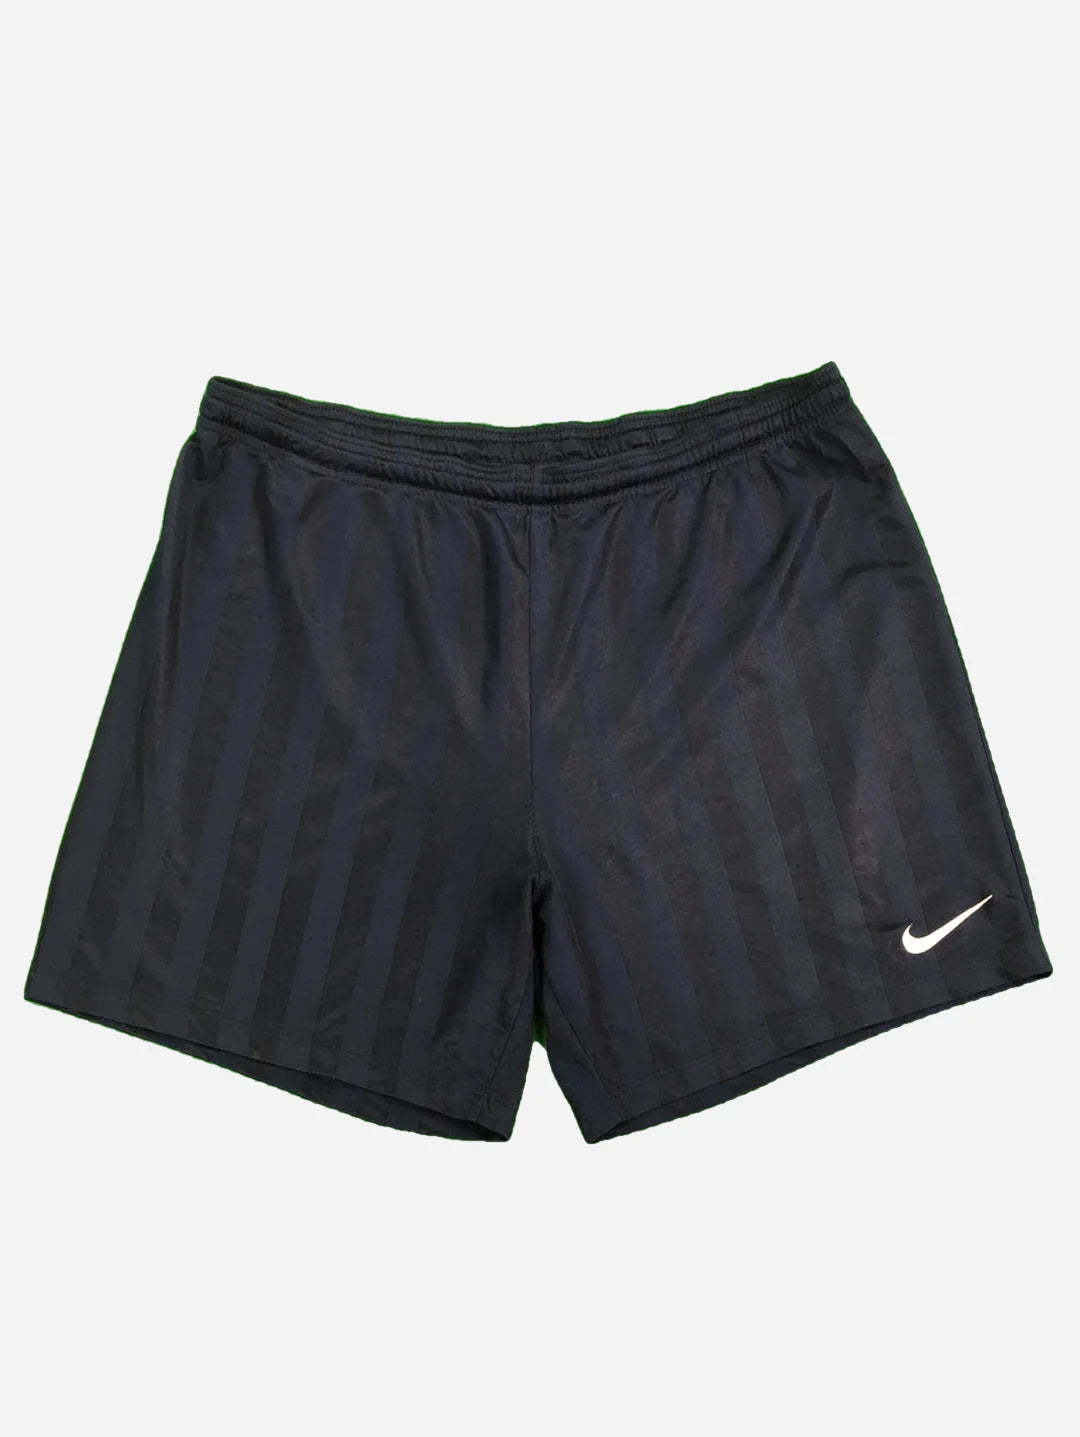 Nike Sports Shorts (L)